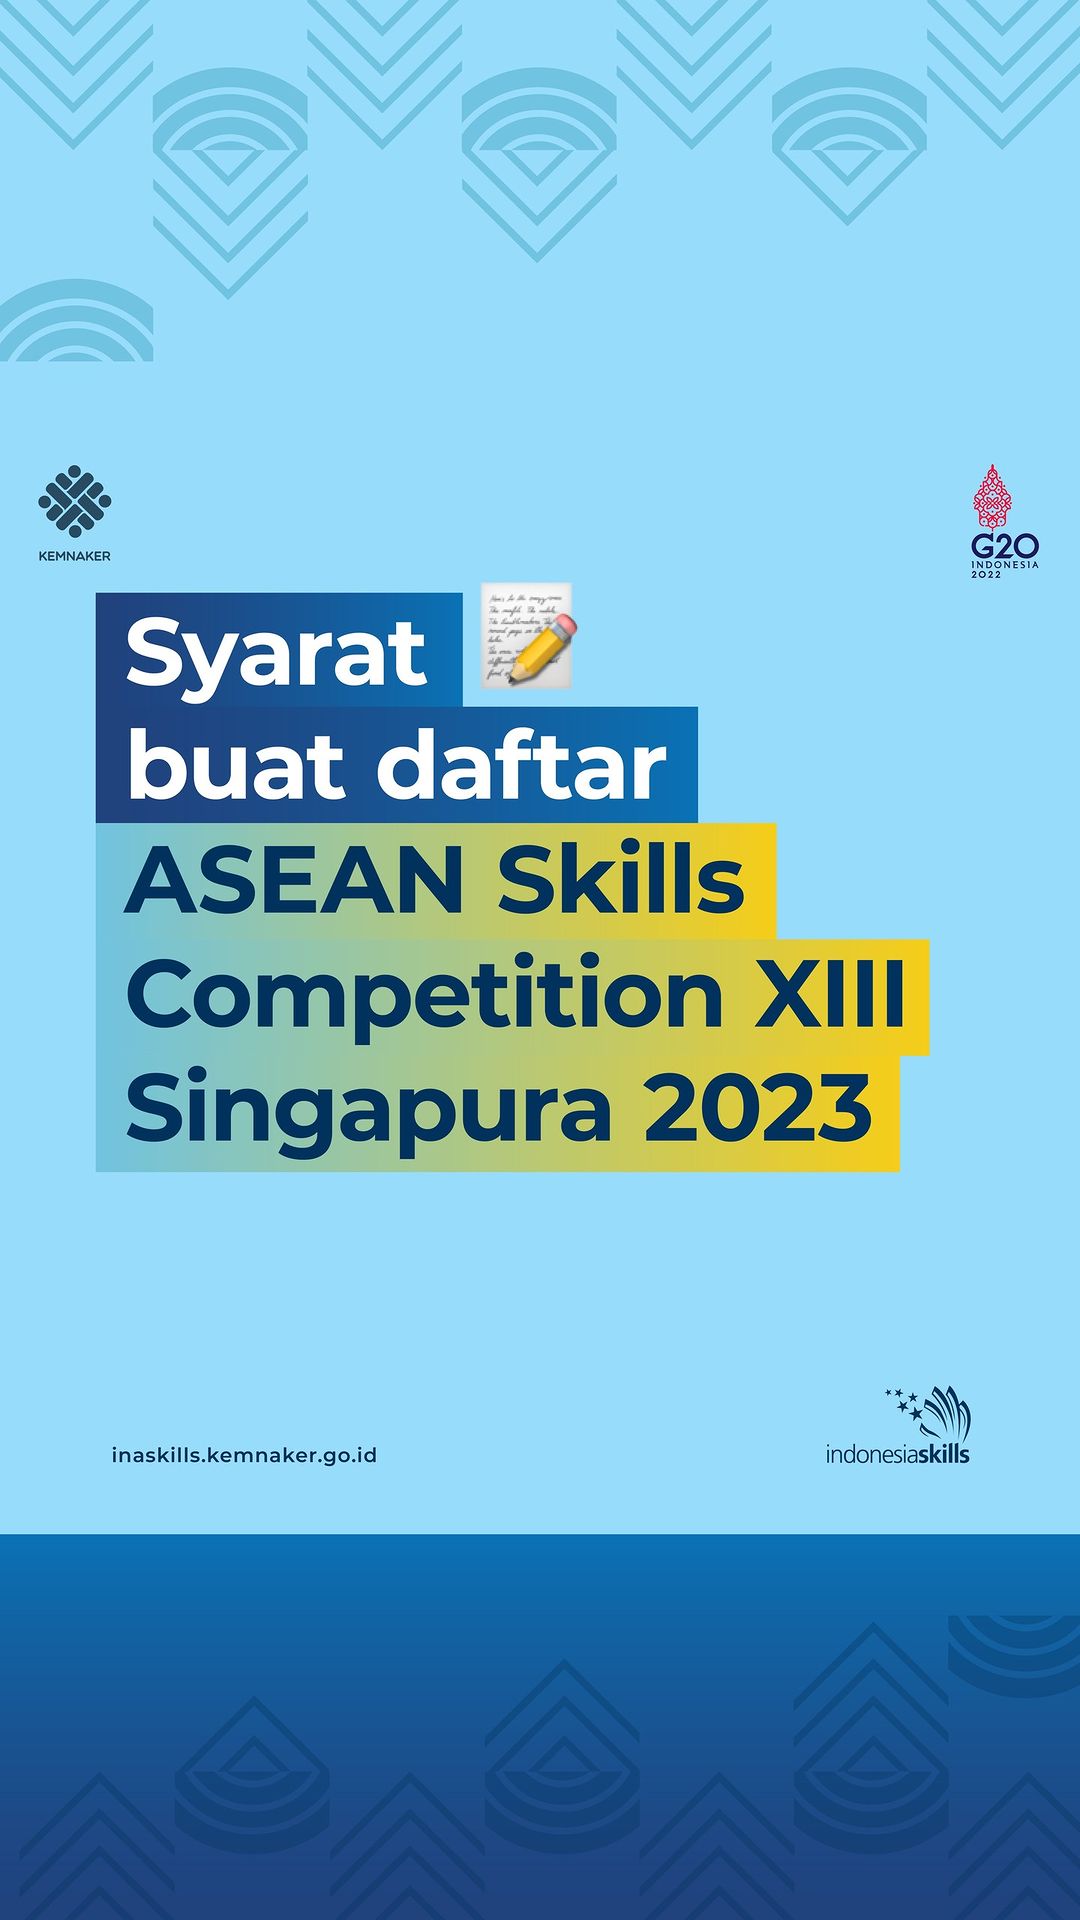 Syarat Asean Skills Competition XIII Singapura 2023